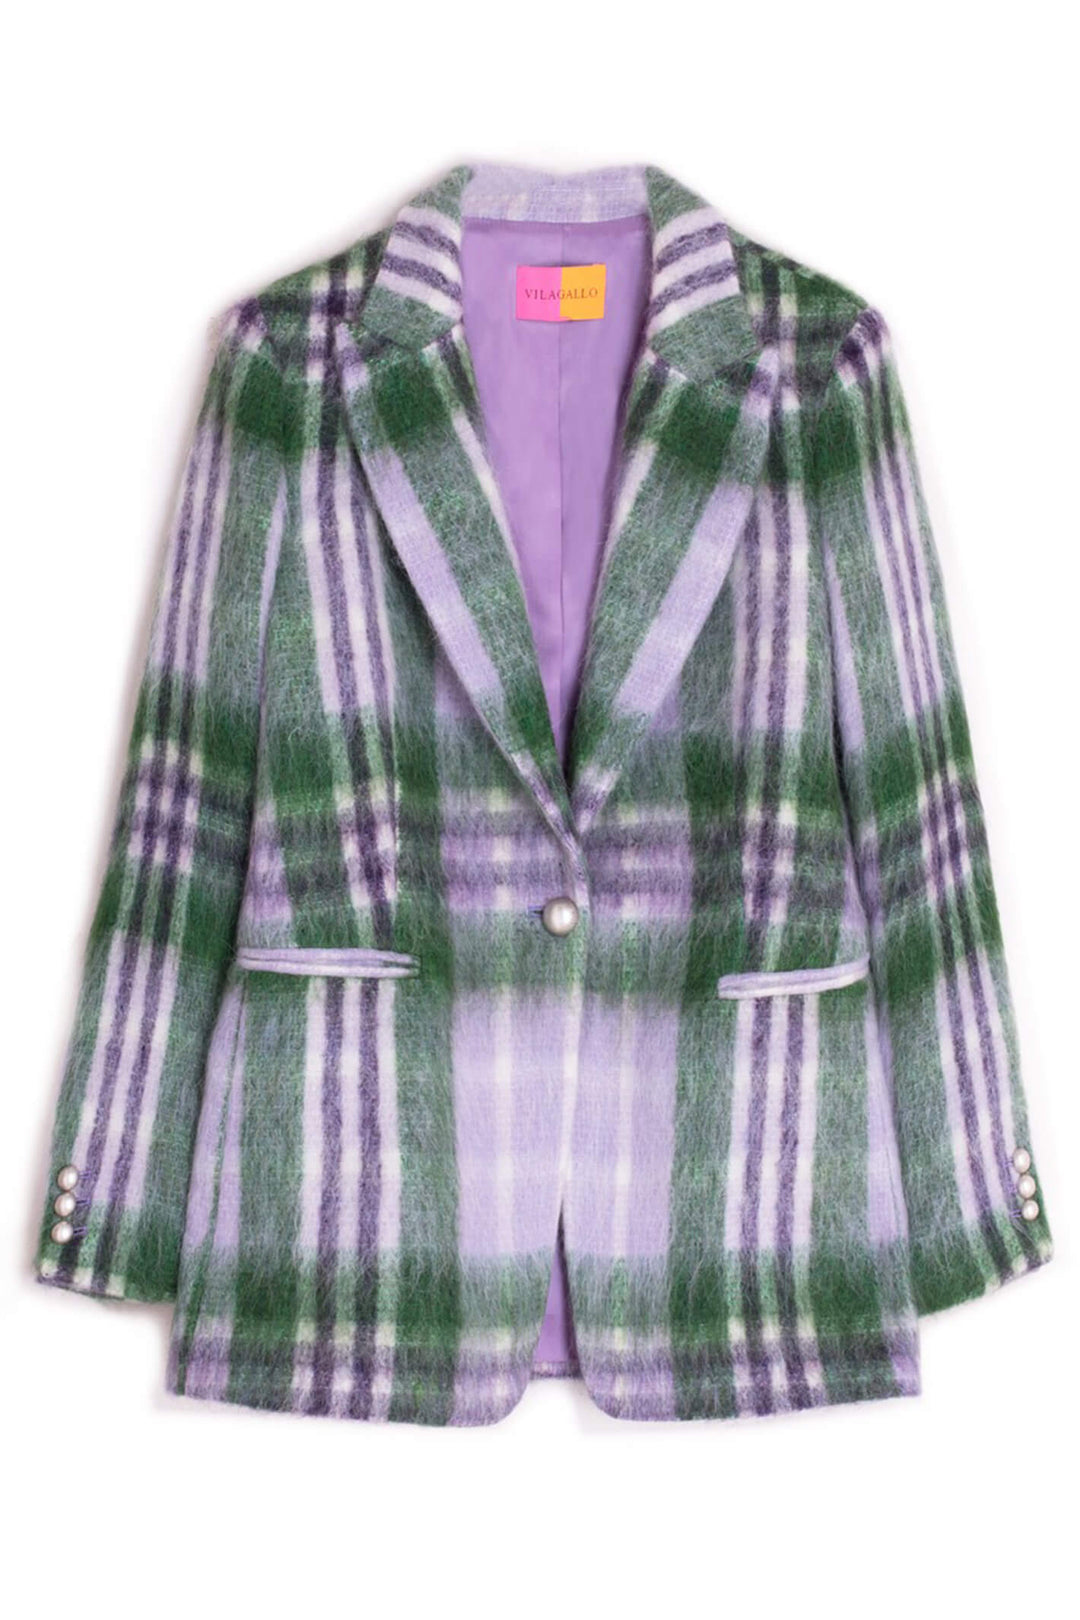 Vilagallo 29714 Katrina Alpaca Wool Purple Tartan Jacket - Experience Boutique